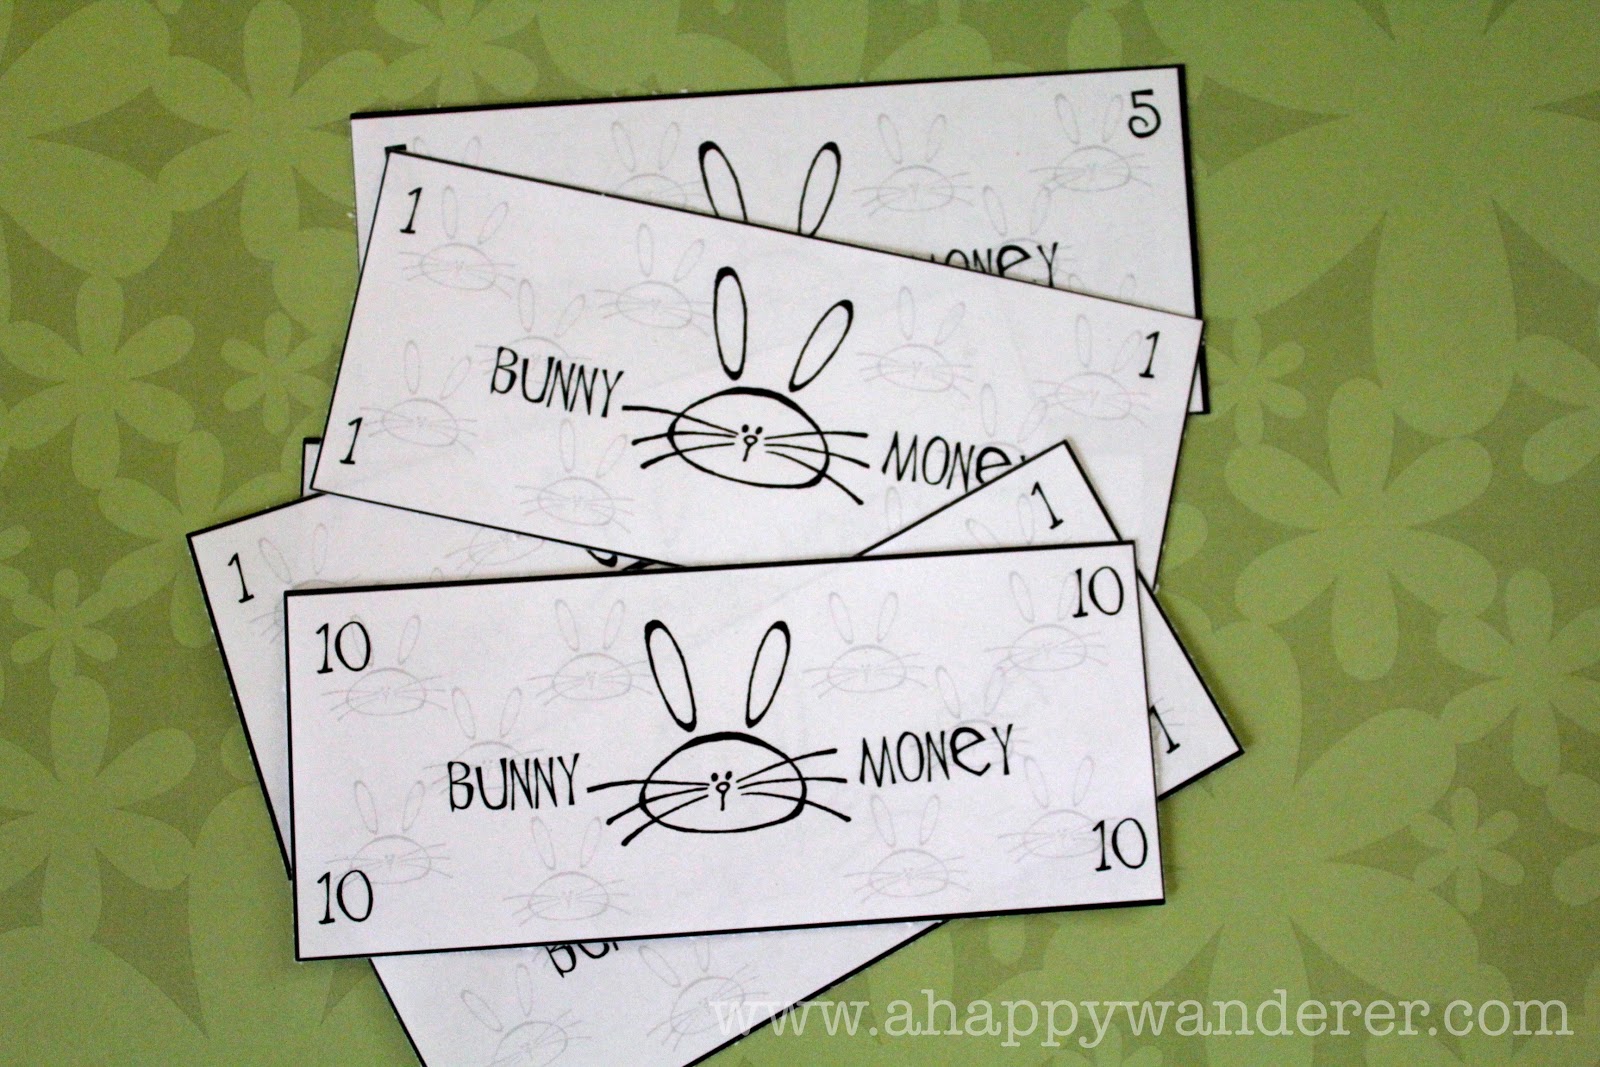 Money bunny. Bunny money. Bunny money тиктокерша. Bunny money отлифанс. Bunny money Alyssa.